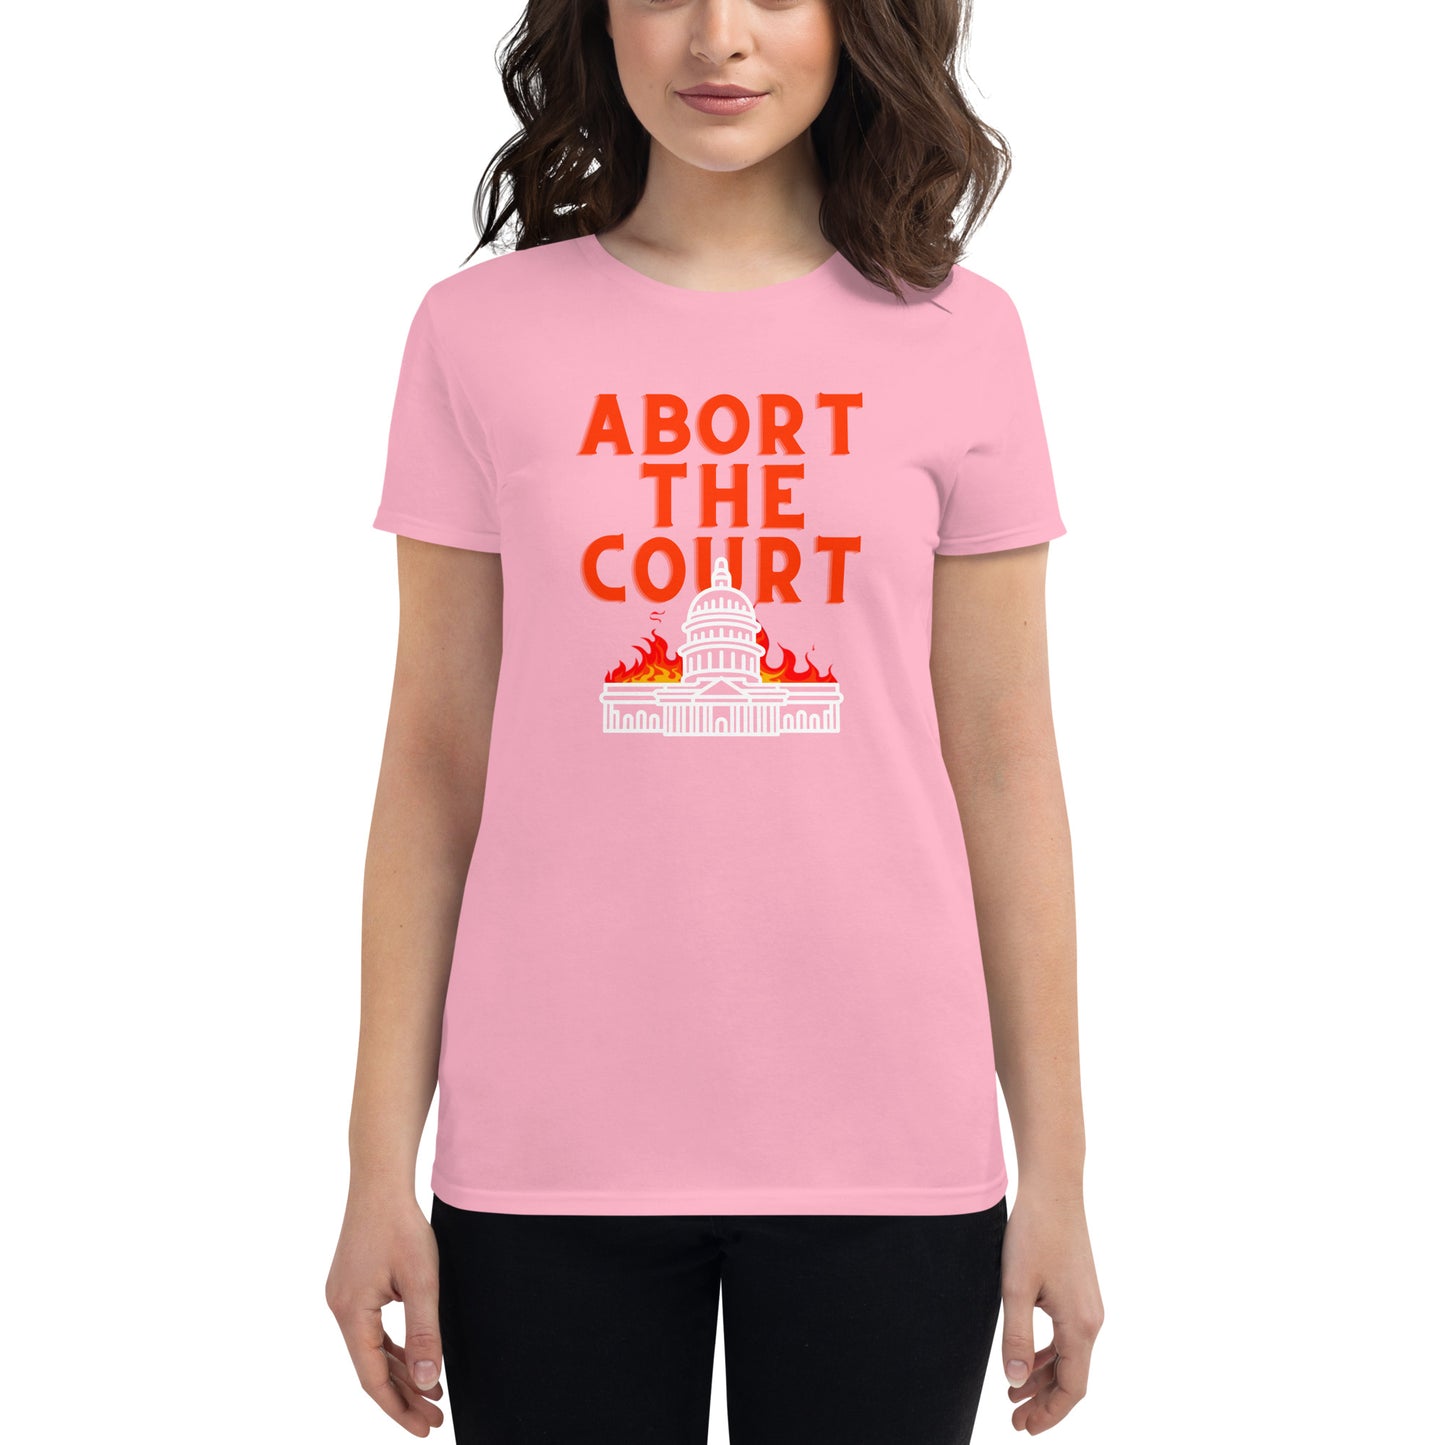 "abort the court" t-shirt